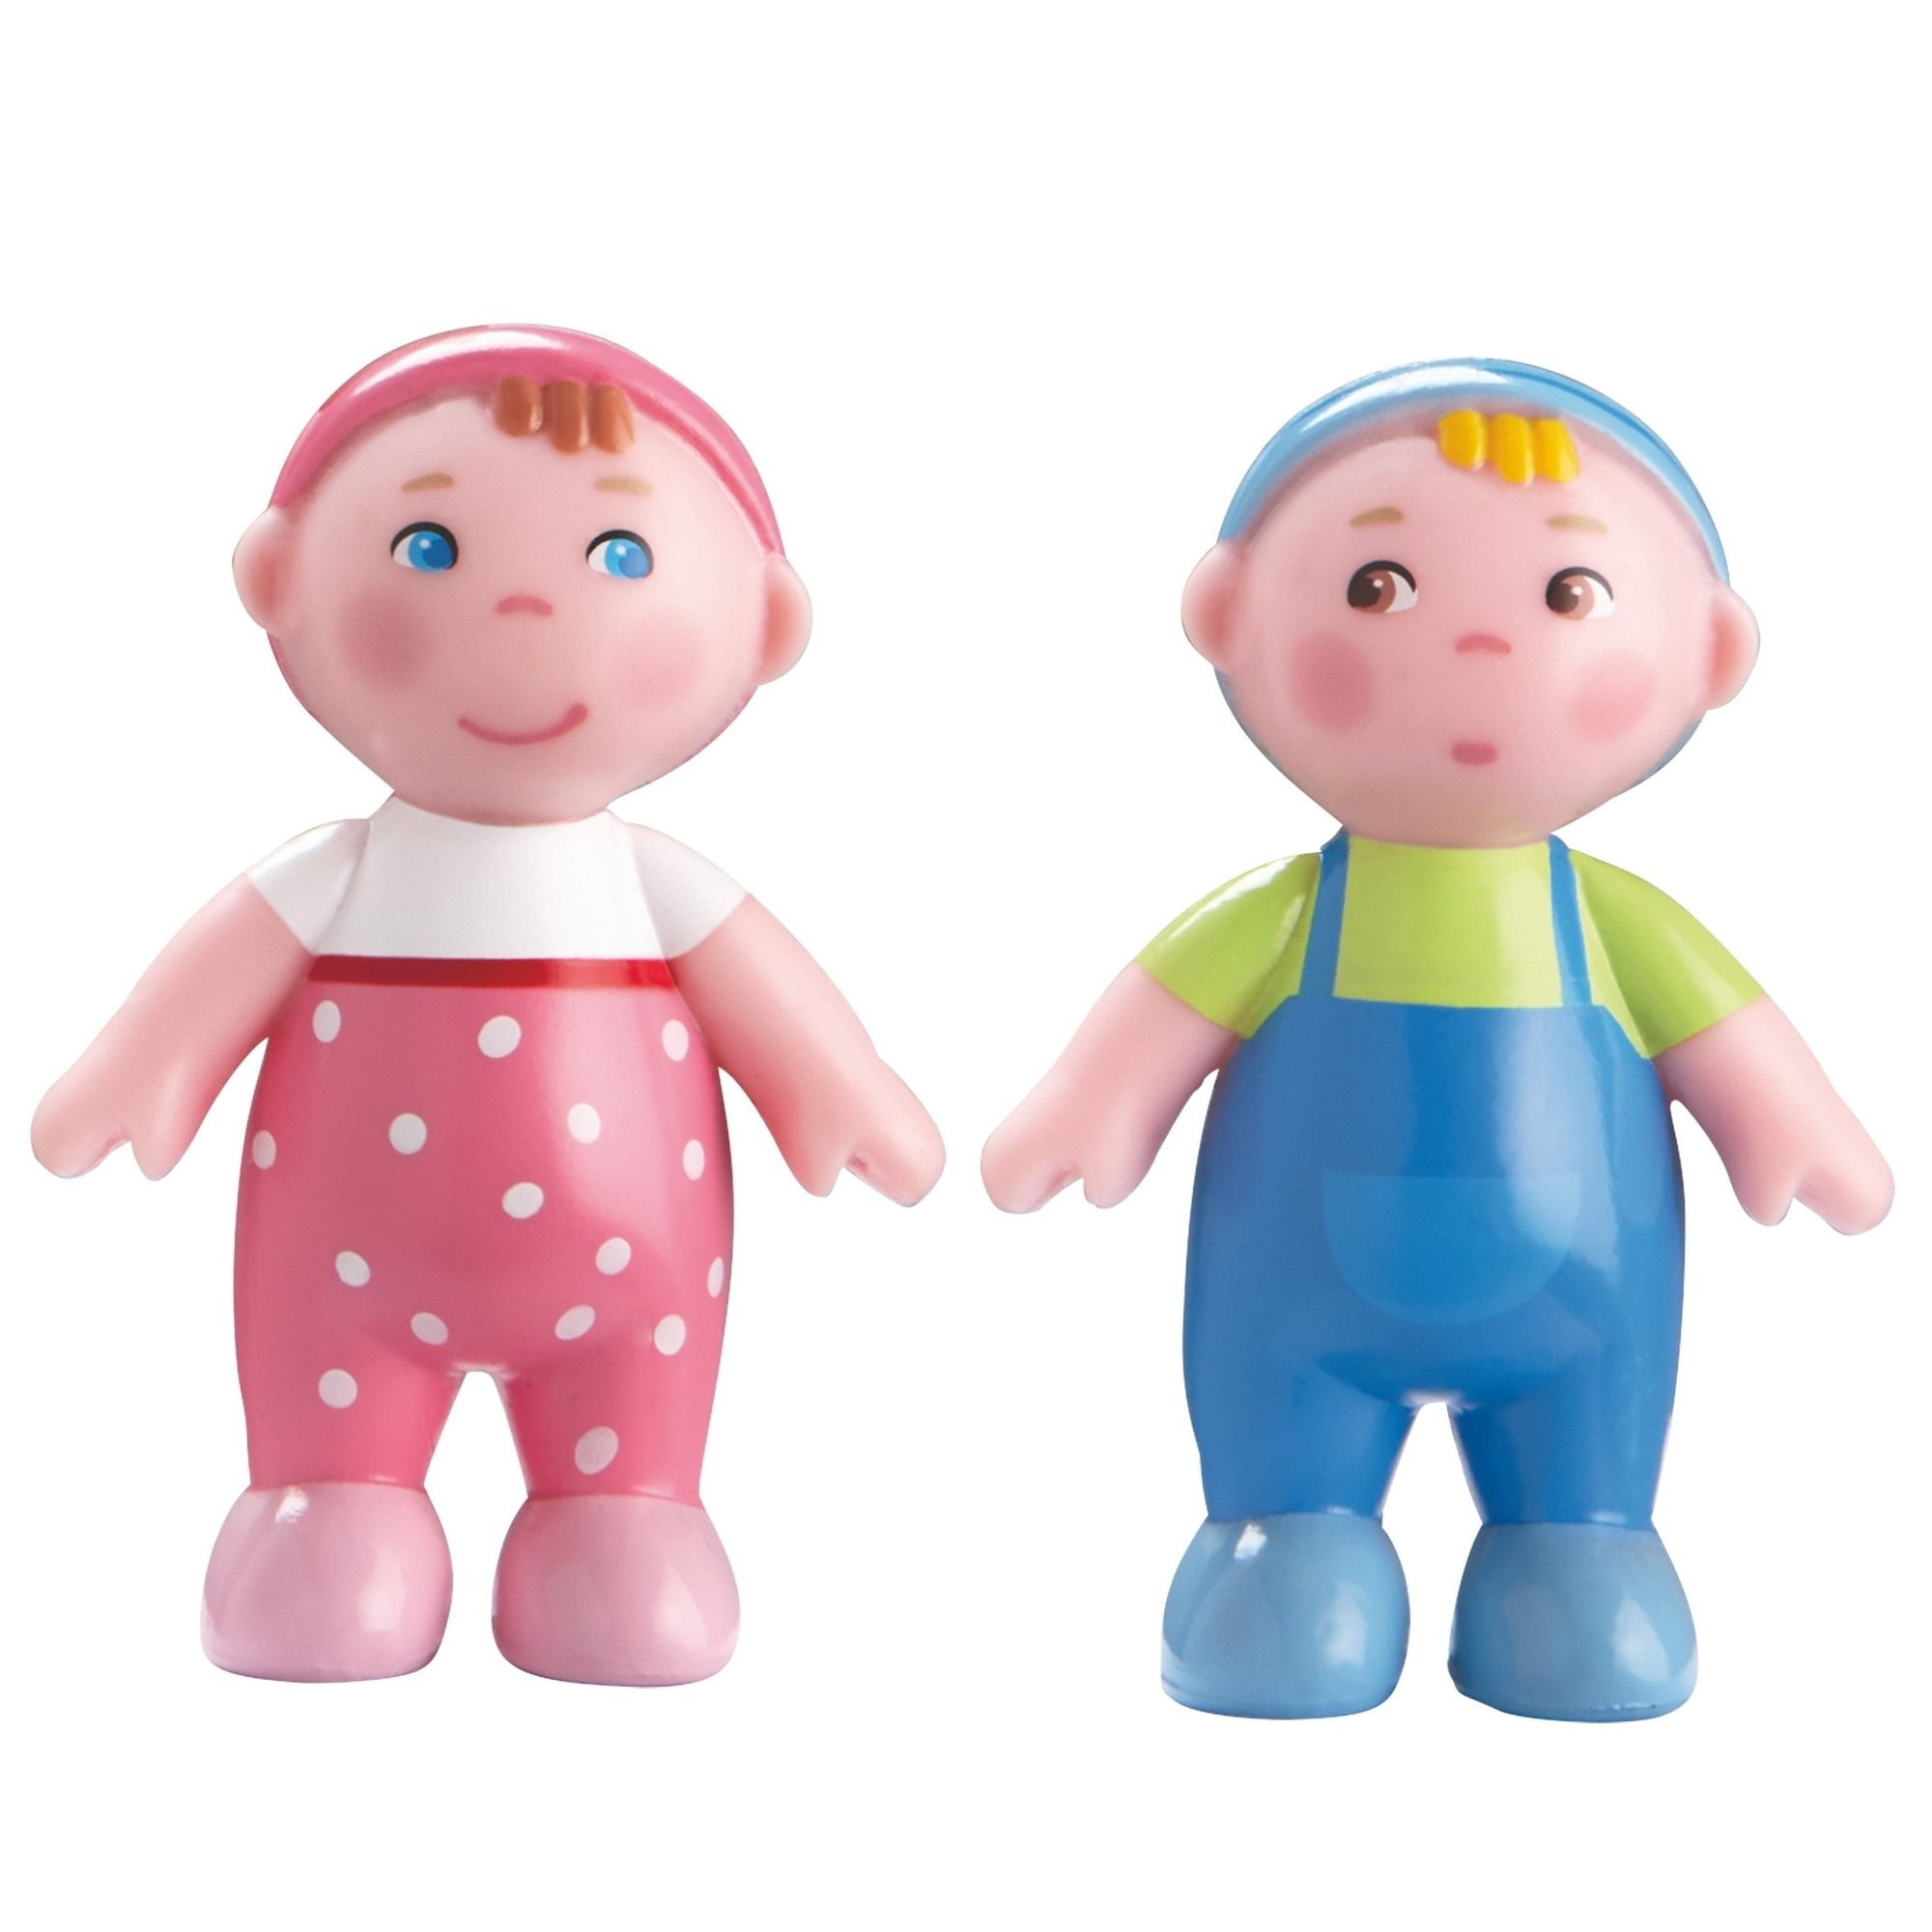 Haba LF Little Friends Kollektion Babys Marieu Max Kinder Babypuppen Spielzeug 